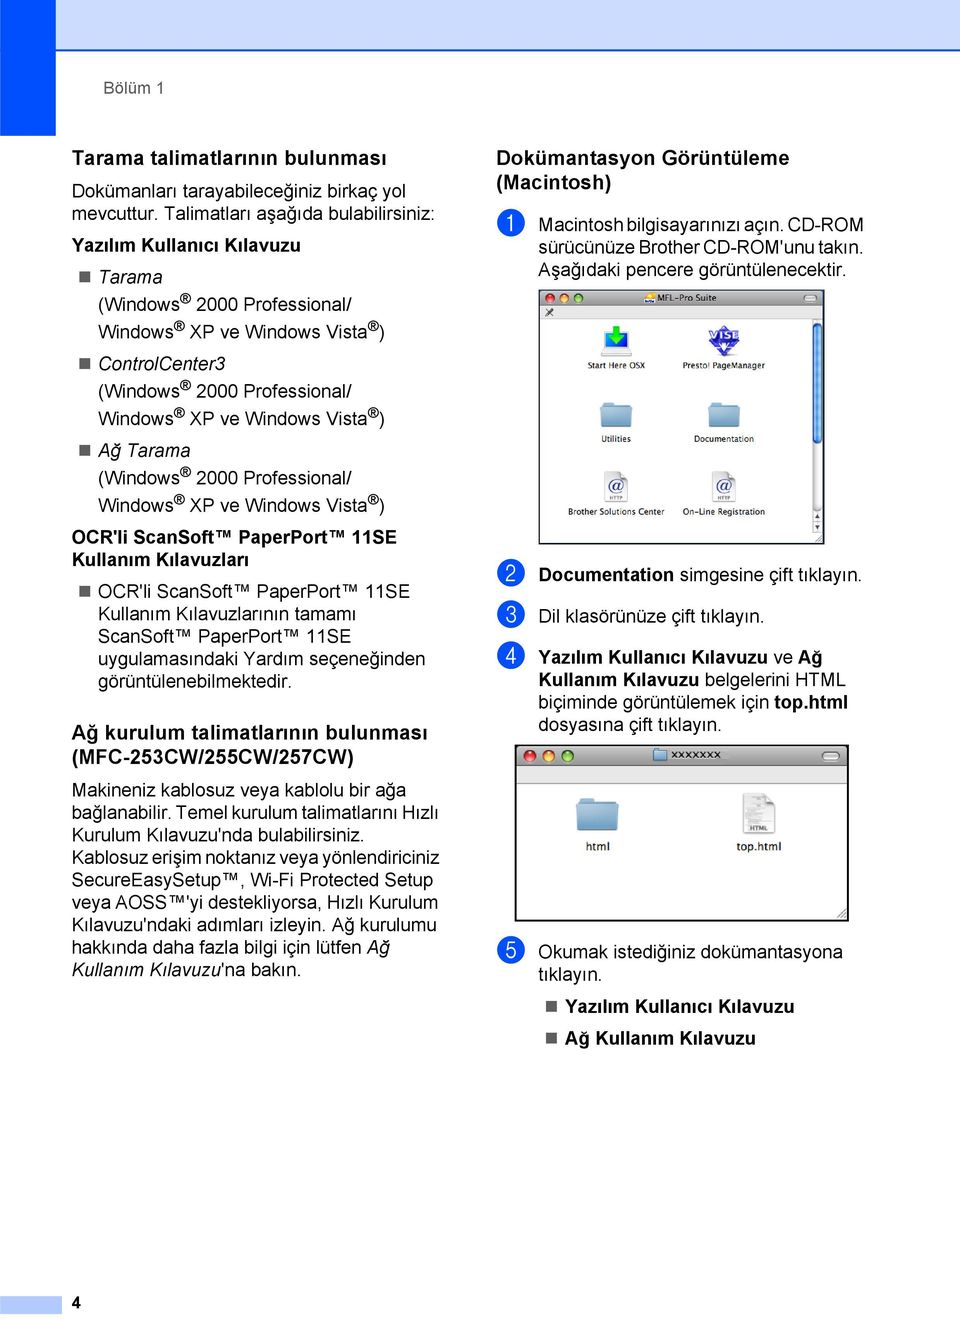 ) Ağ Tarama (Windows 2000 Professional/ Windows XP ve Windows Vista ) OCR'li ScanSoft PaperPort 11SE Kullanım Kılavuzları OCR'li ScanSoft PaperPort 11SE Kullanım Kılavuzlarının tamamı ScanSoft